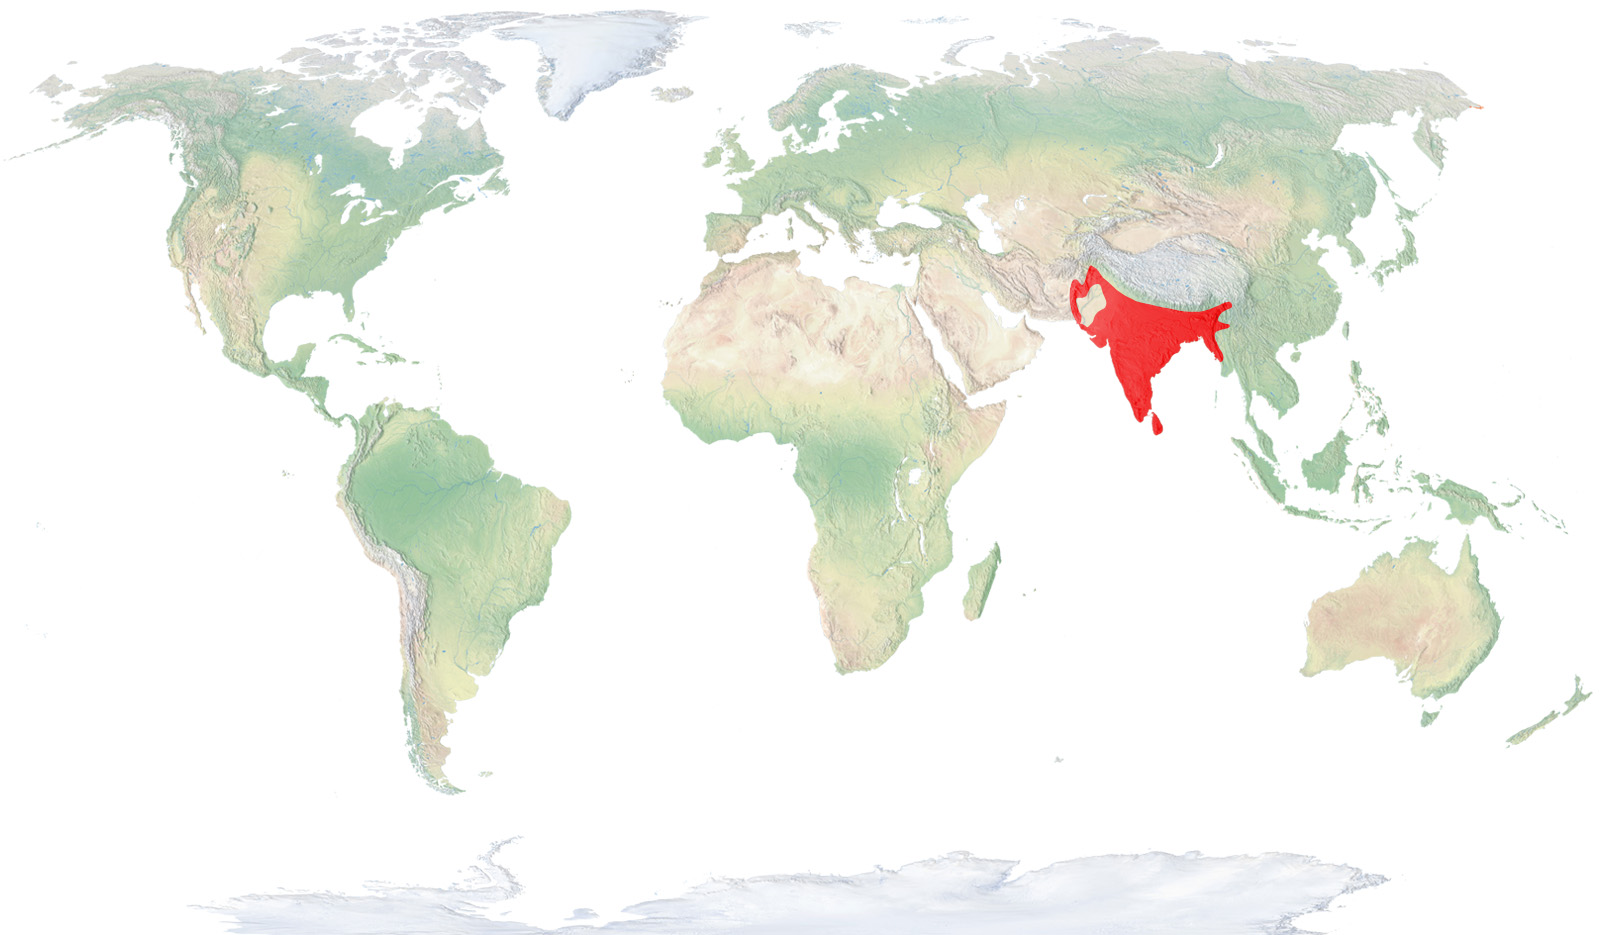 Paquistán, India, Nepal y Sri Lanka